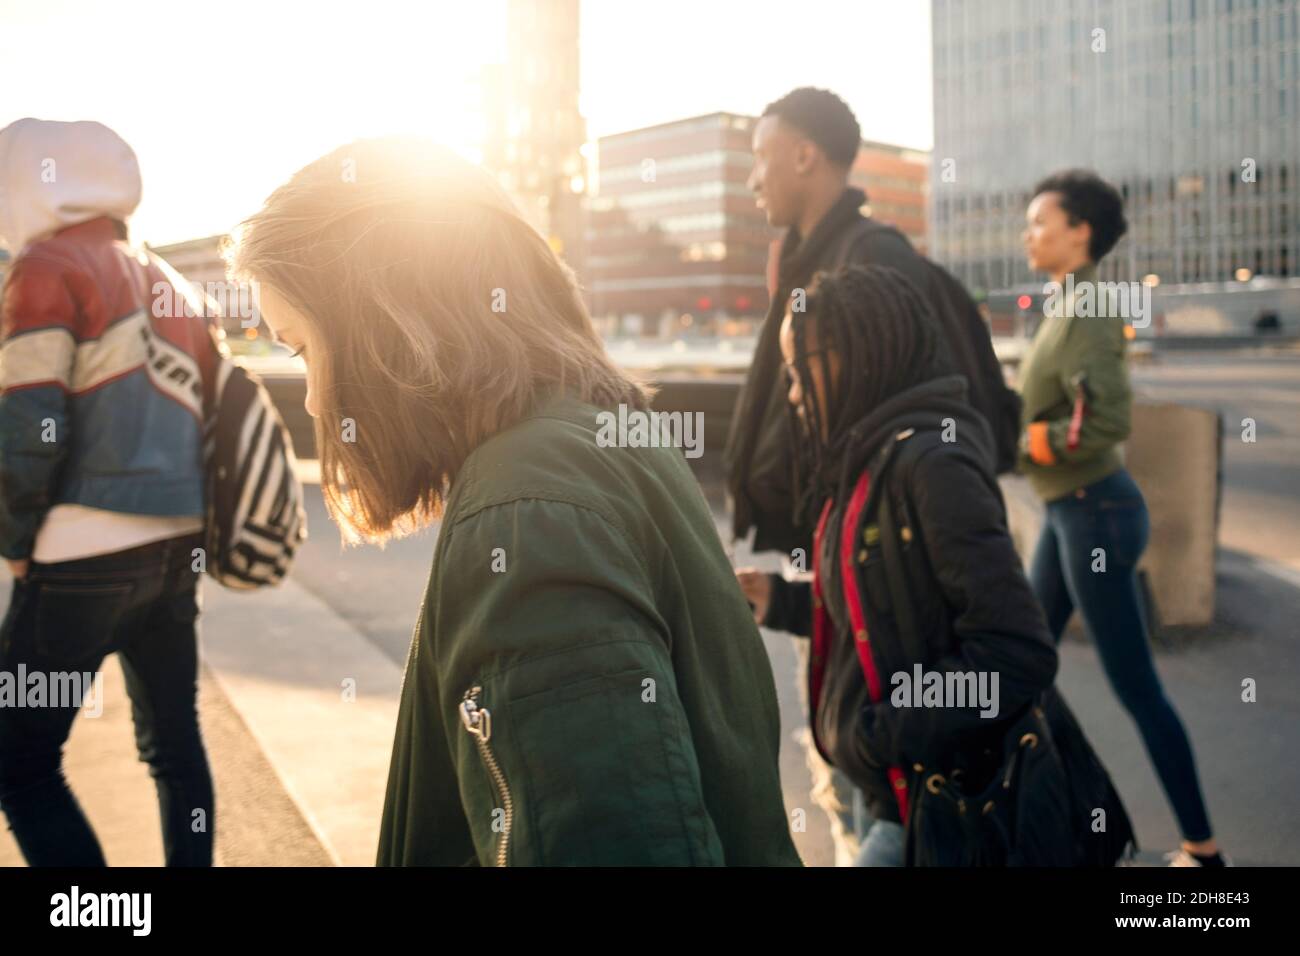 Side view of teenagers walking on street against buildings in city Stock Photo